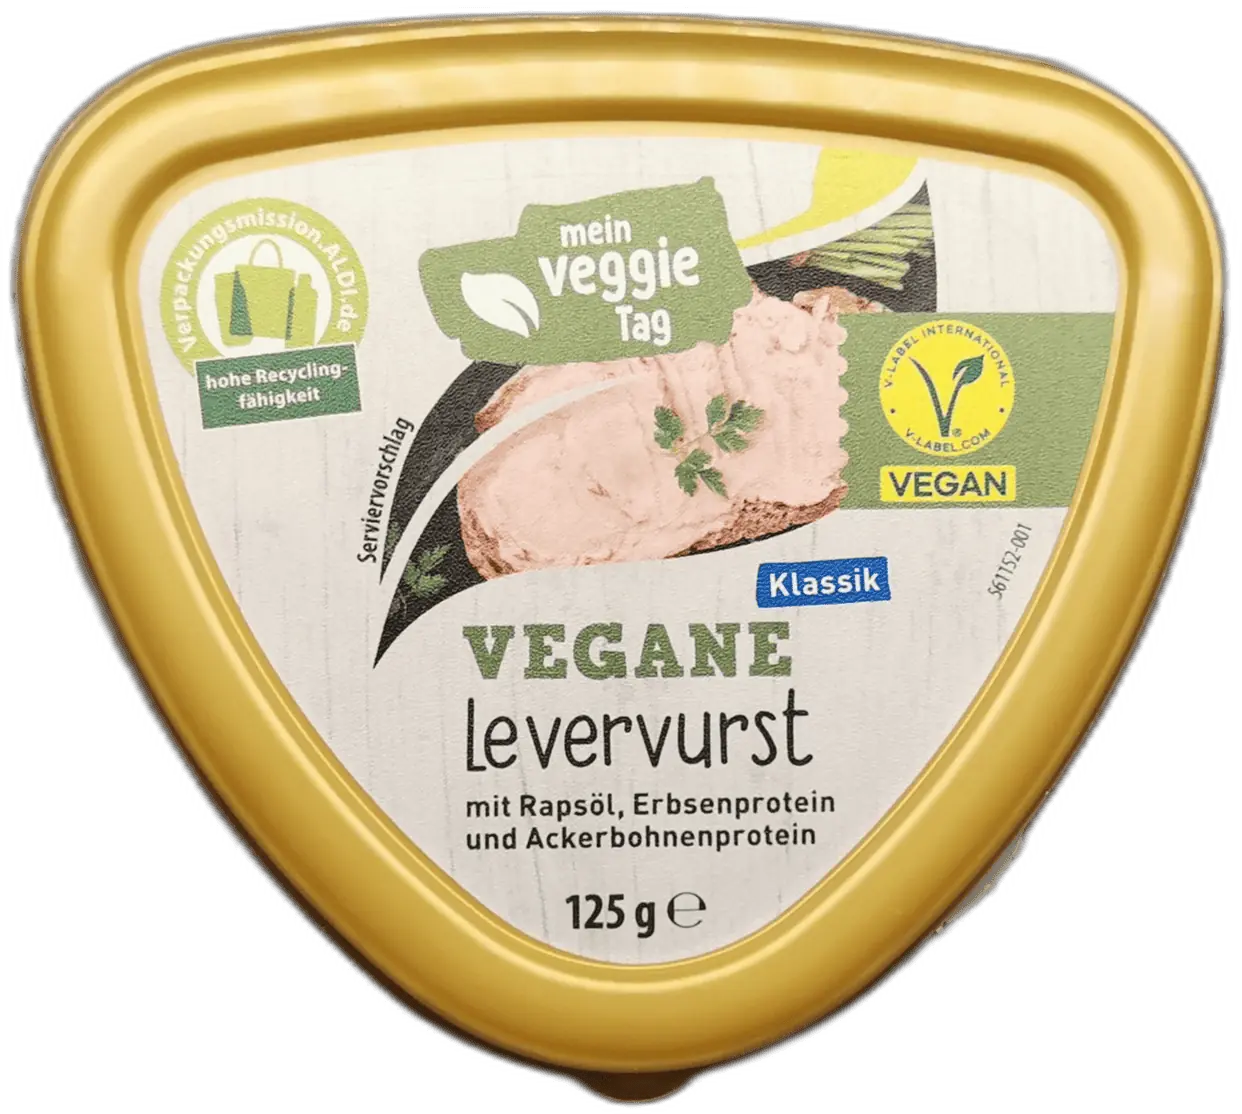 Neu bei Aldi: 3x Mein Veggie Tag vegane Leberwurst / Levervurst